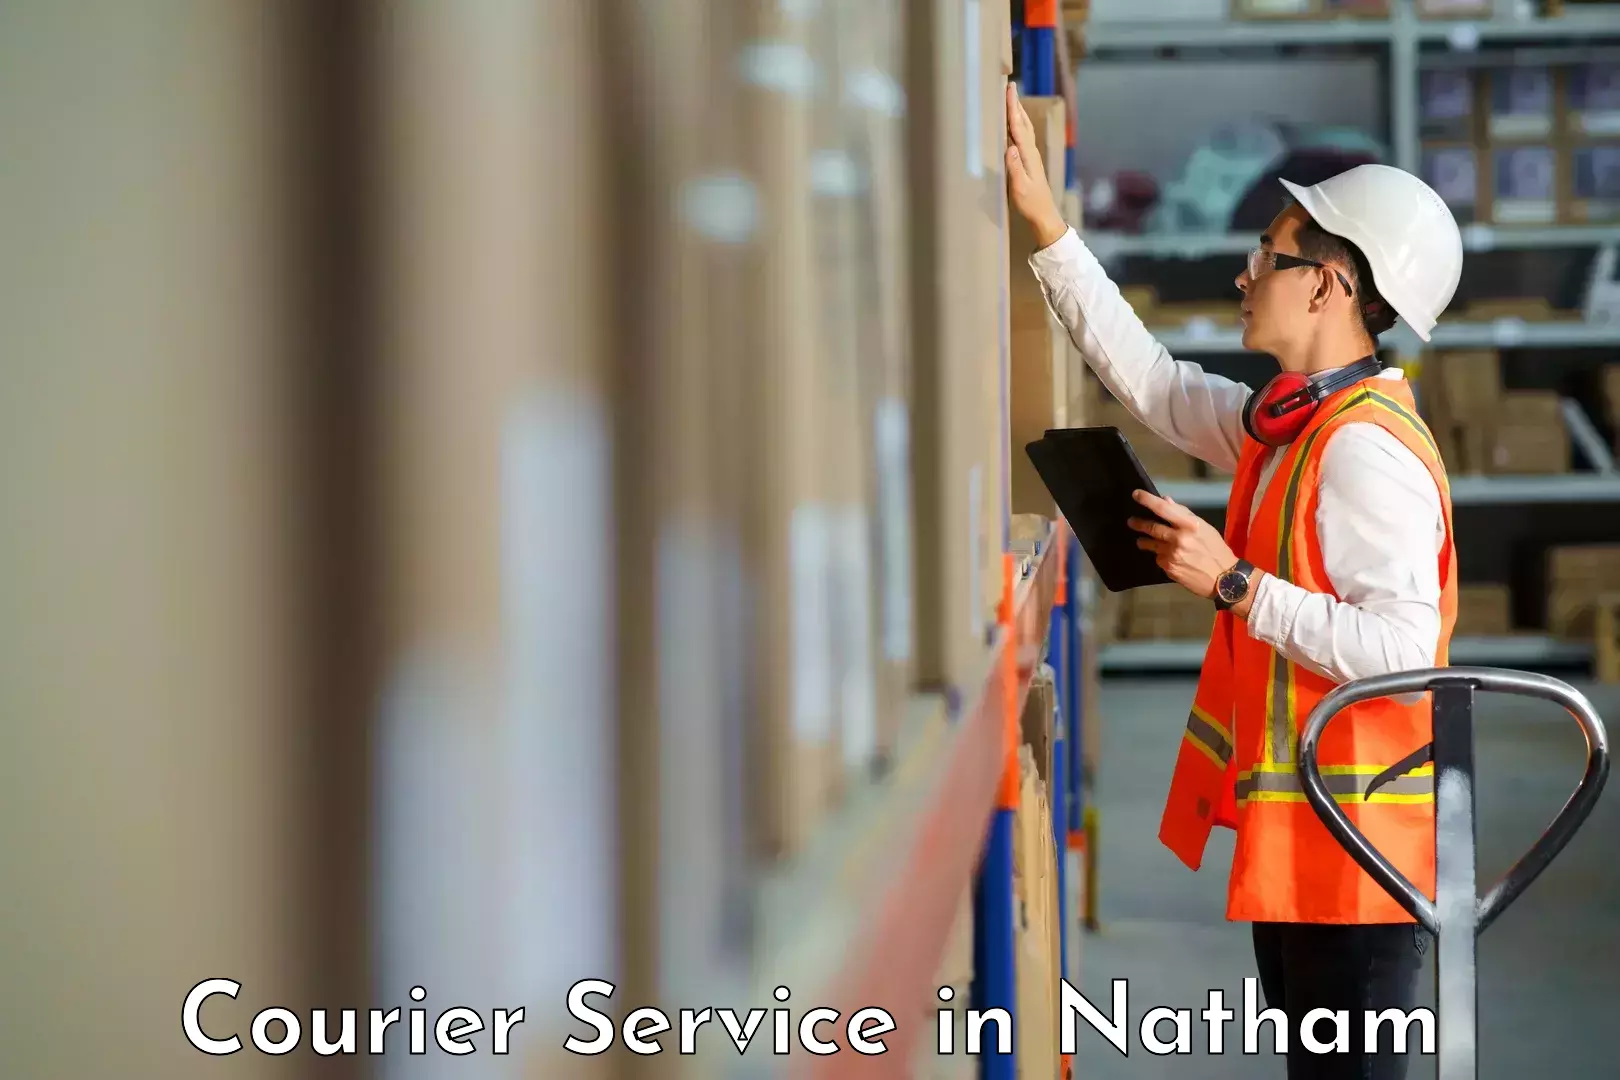 Efficient parcel service in Natham